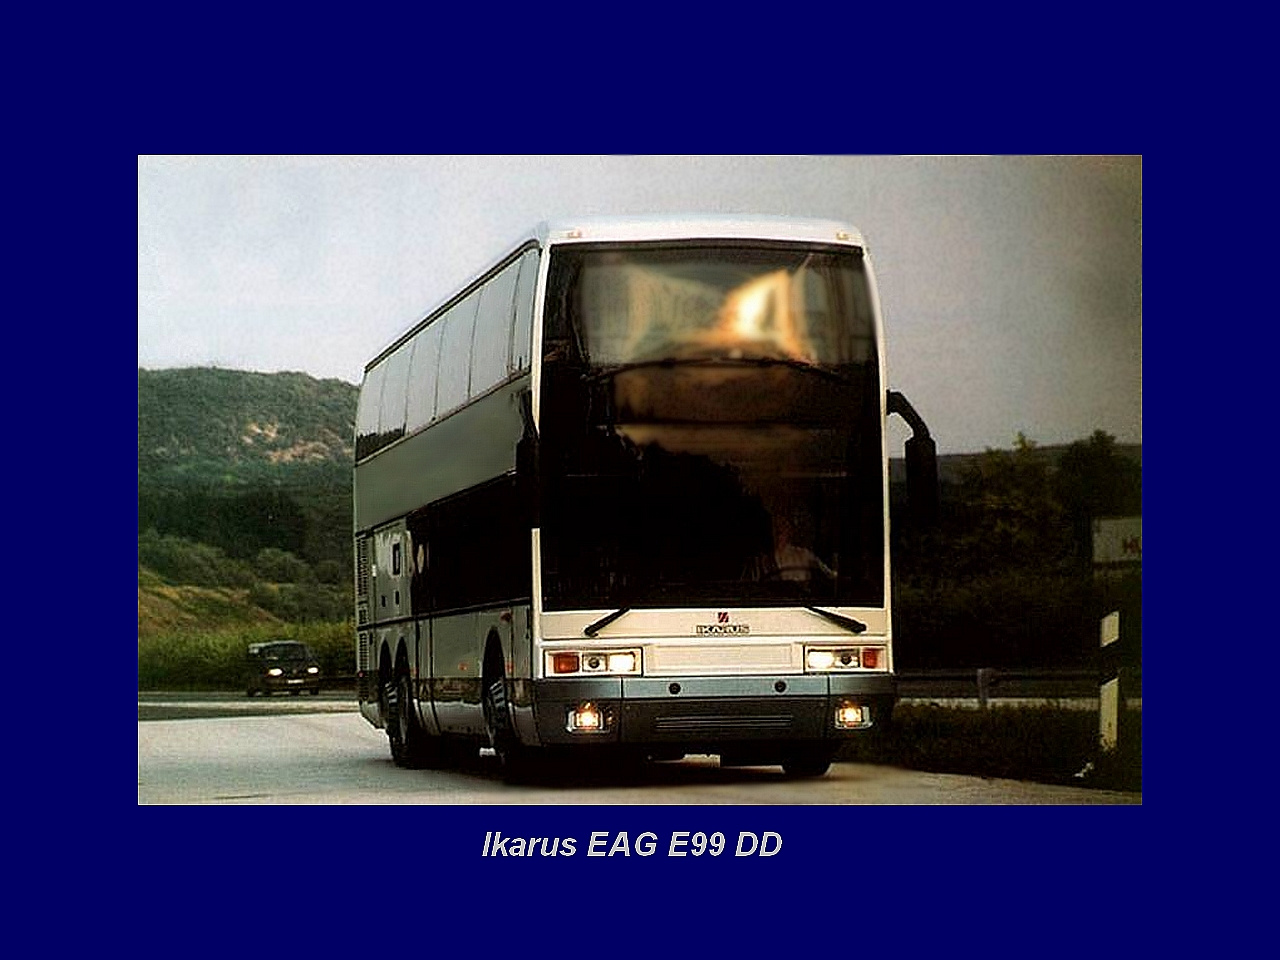 Magyar Busz, Ikarus EAG E99 DD double-decker